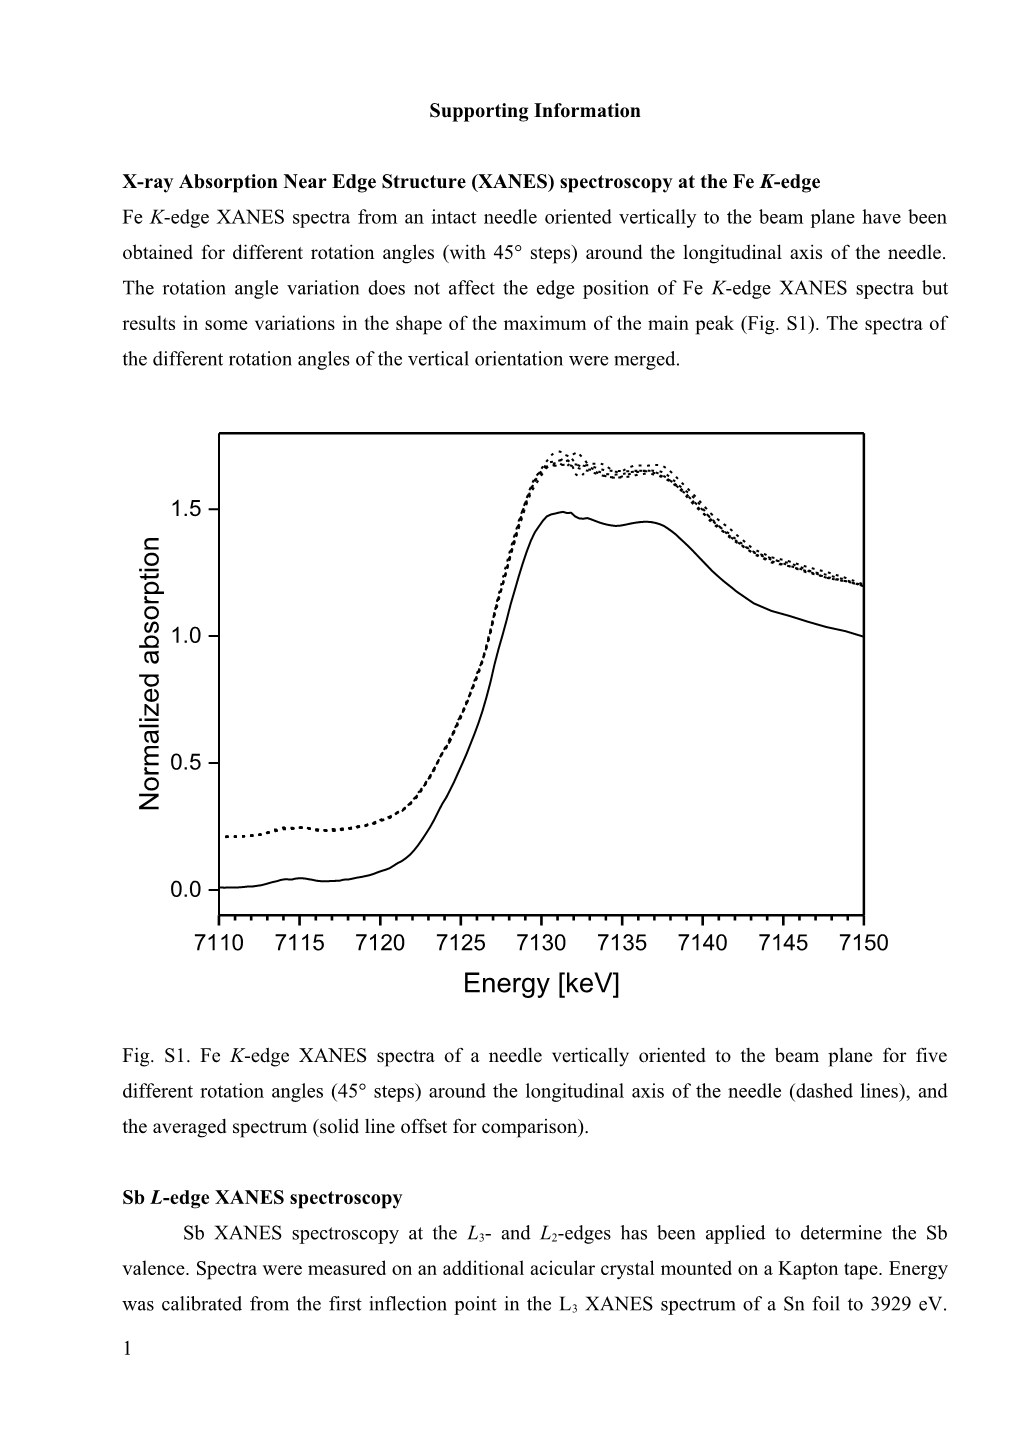 X-Ray Absorption Near Edge Structure (XANES) Spectroscopy at the Fe K-Edge